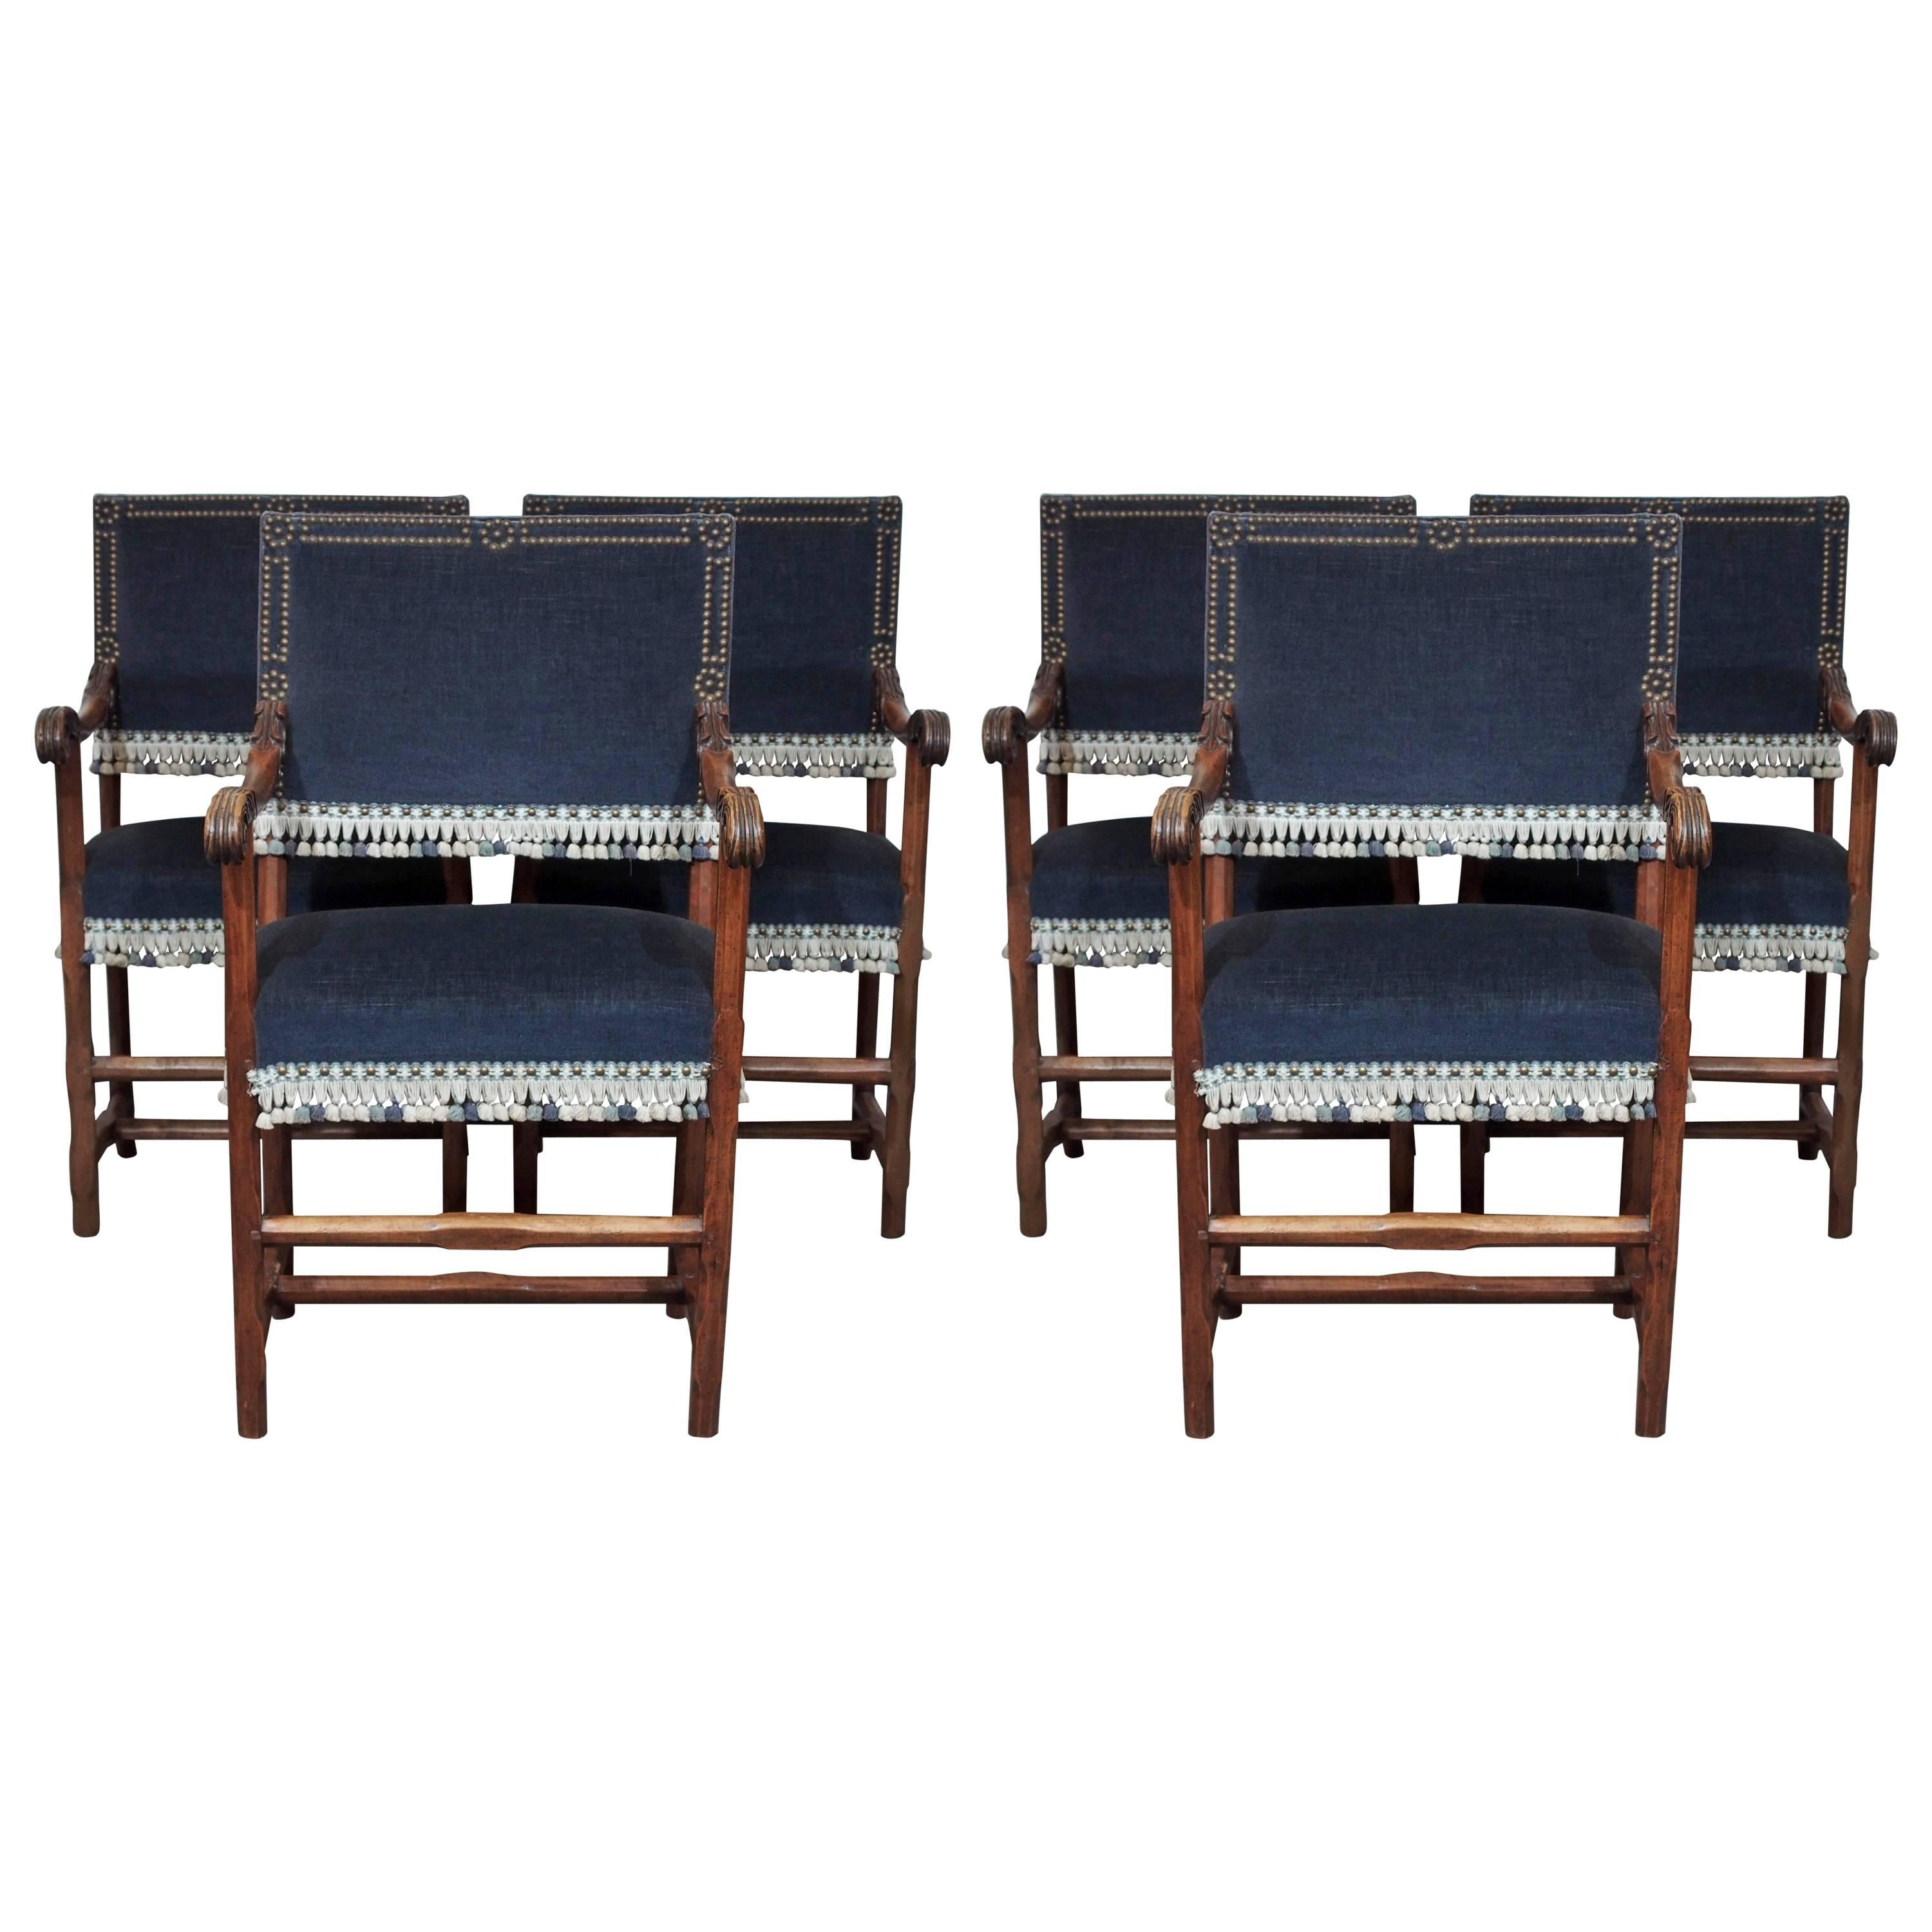 Set of 6 18th century Italian walnut upholstered hall/dining chairs